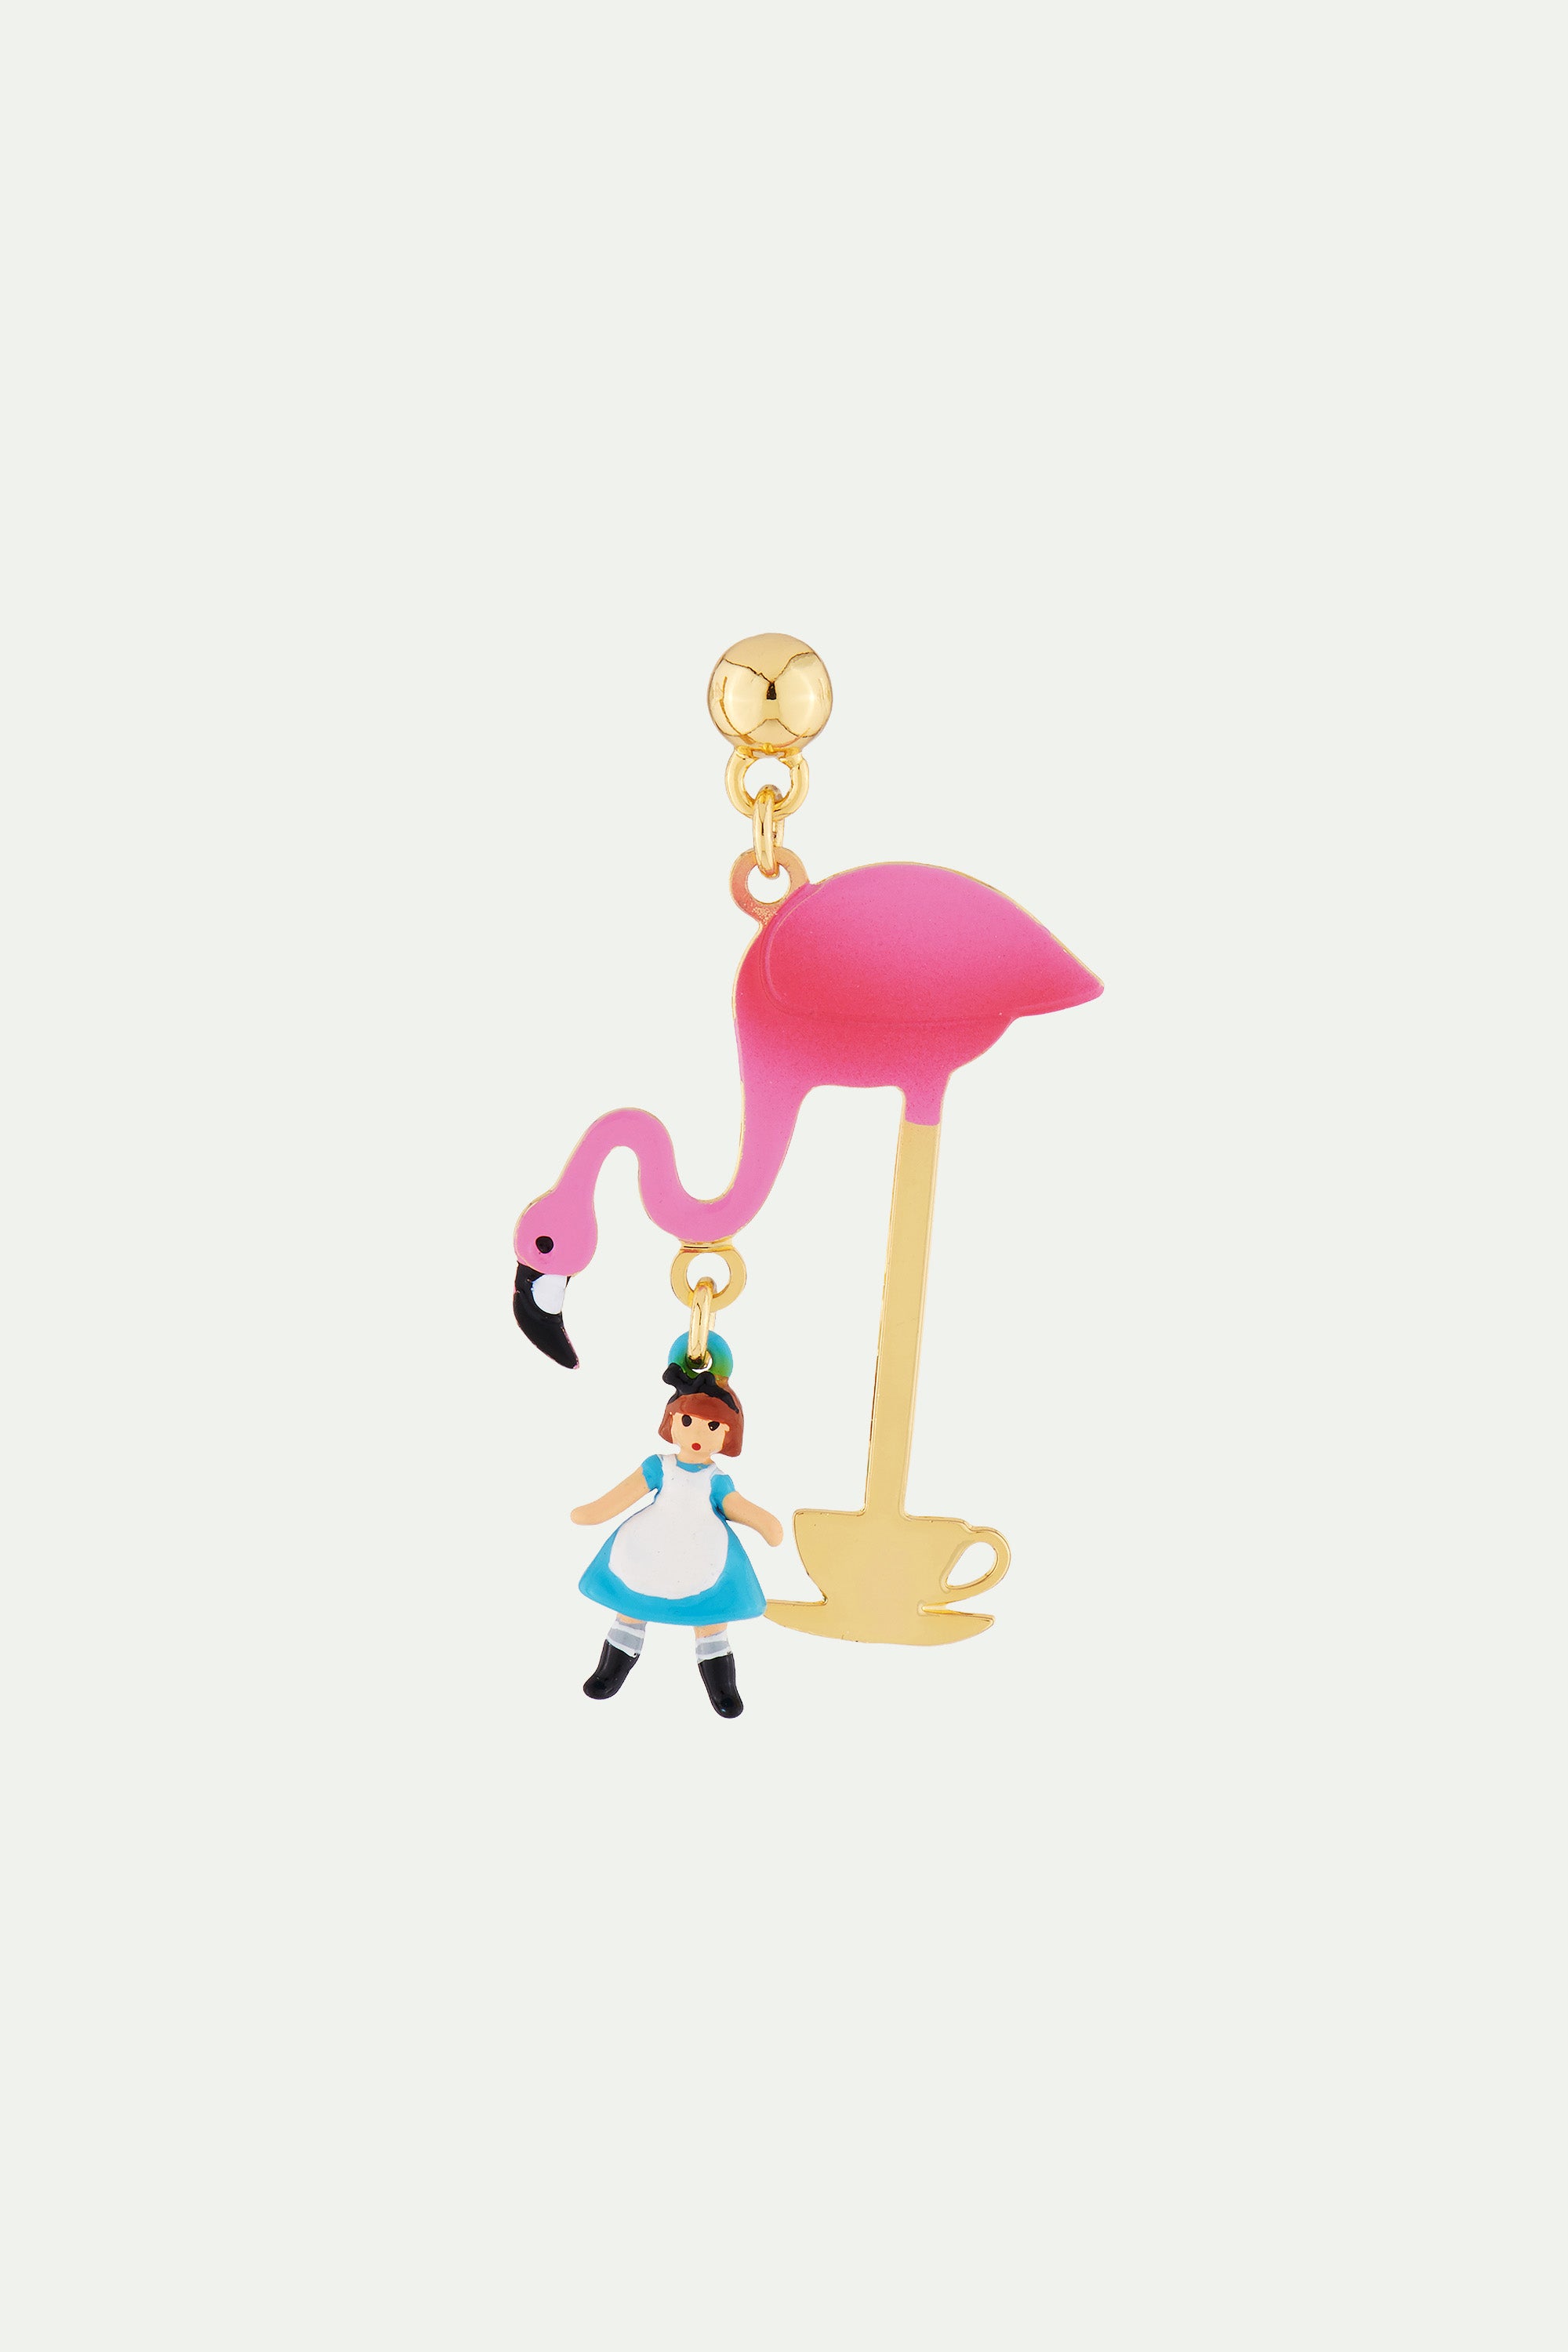 Alice and Pink Flamingo Tea Time Stud Earrings